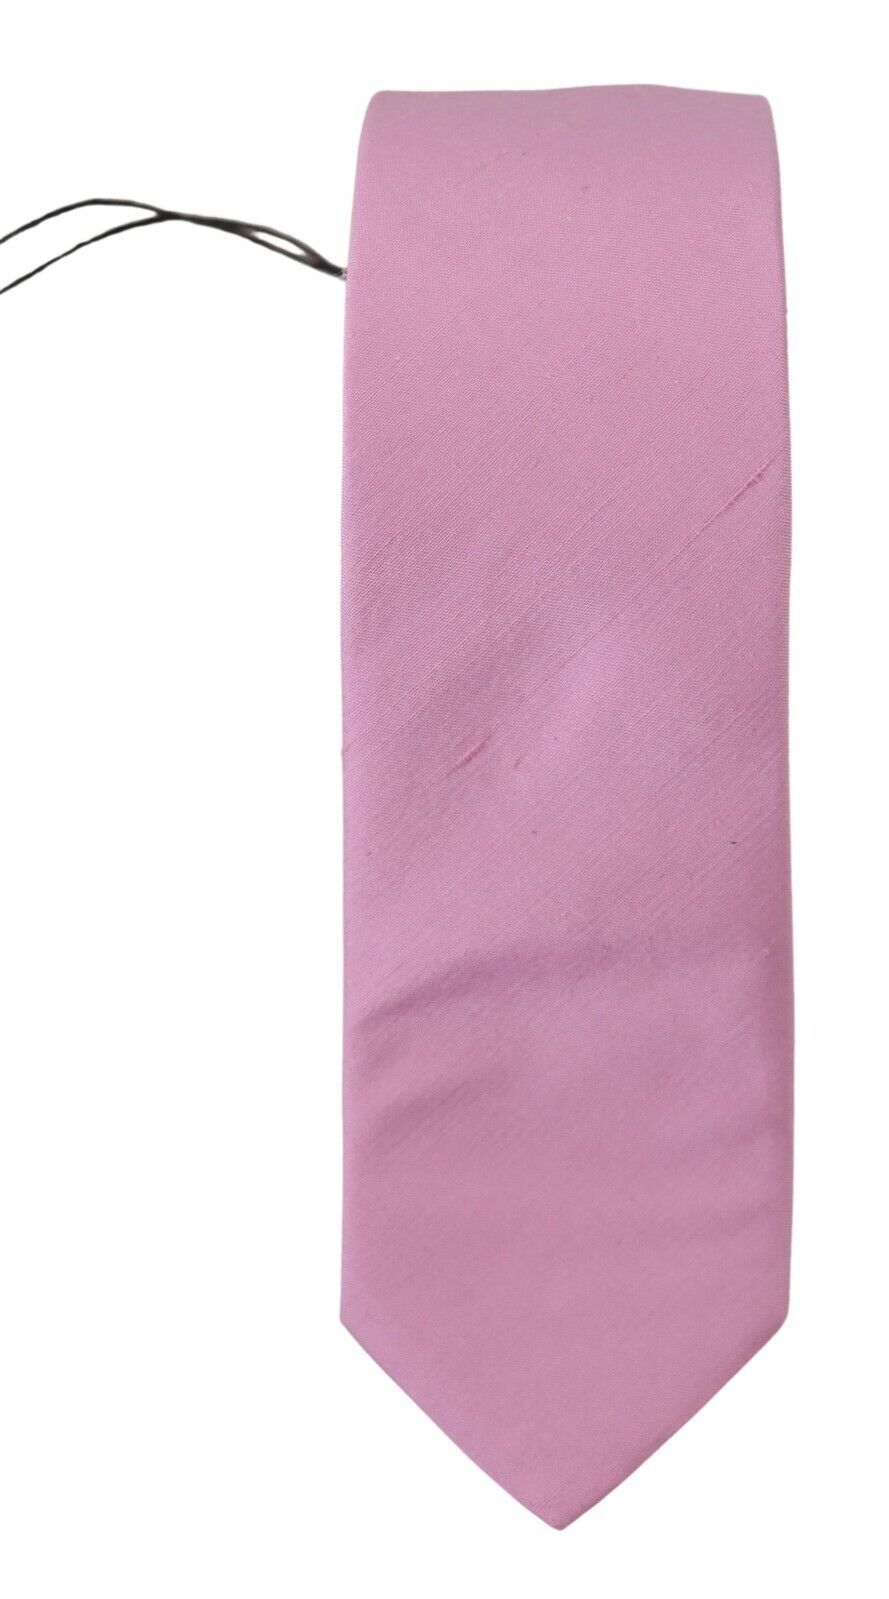 Elegant Silk Men's Tie in Pink